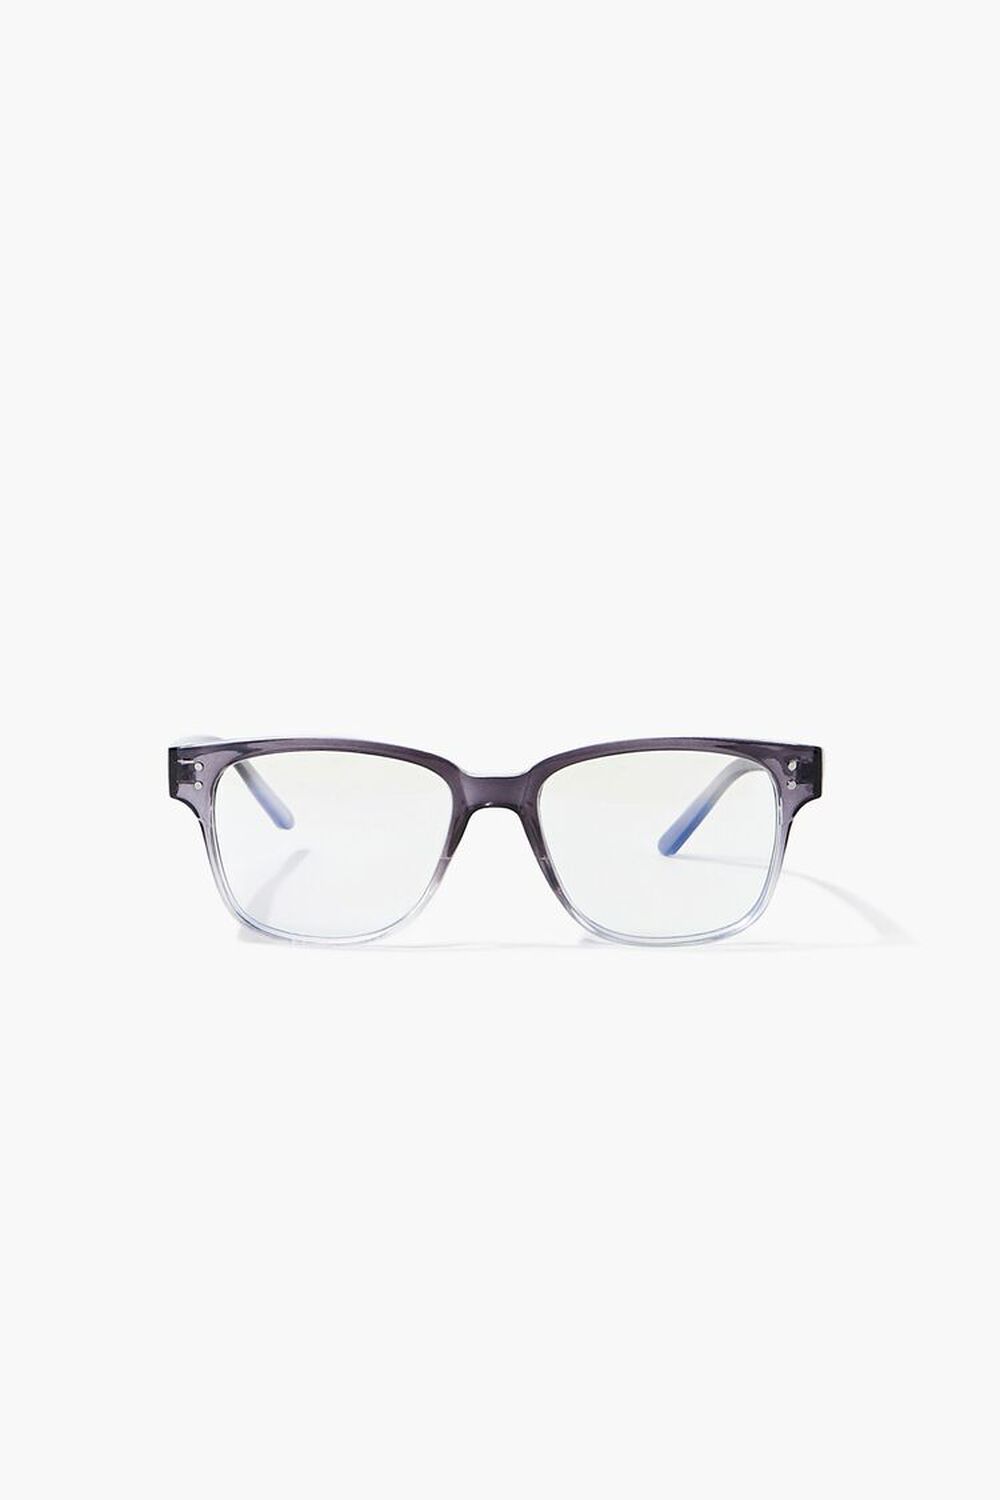 Blue Light Square Reader Glasses, image 1